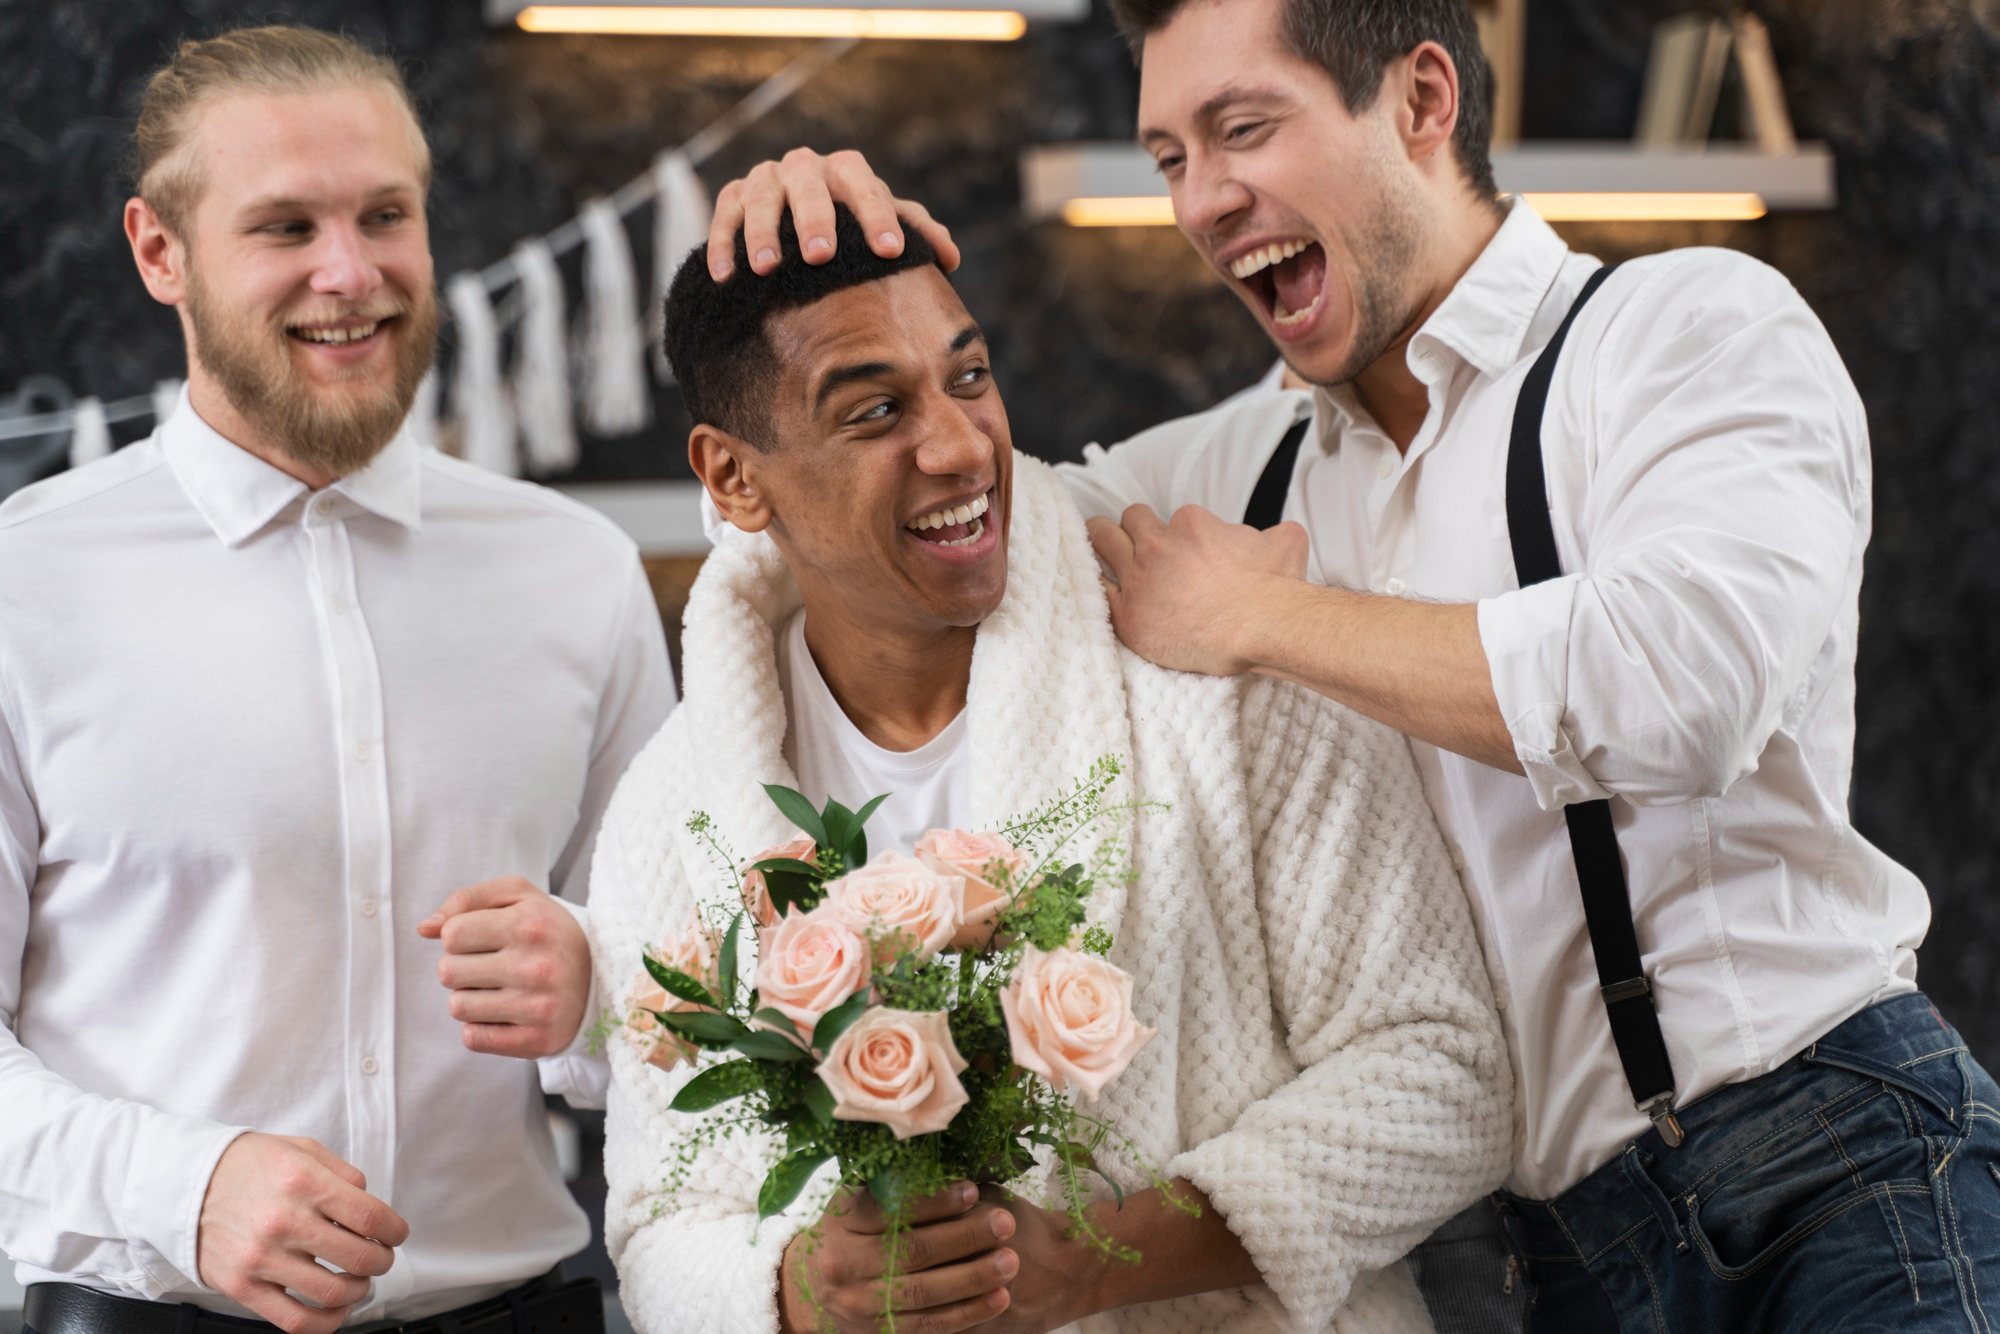 A best man and groomsman celebrating the groom | Source: Freepik